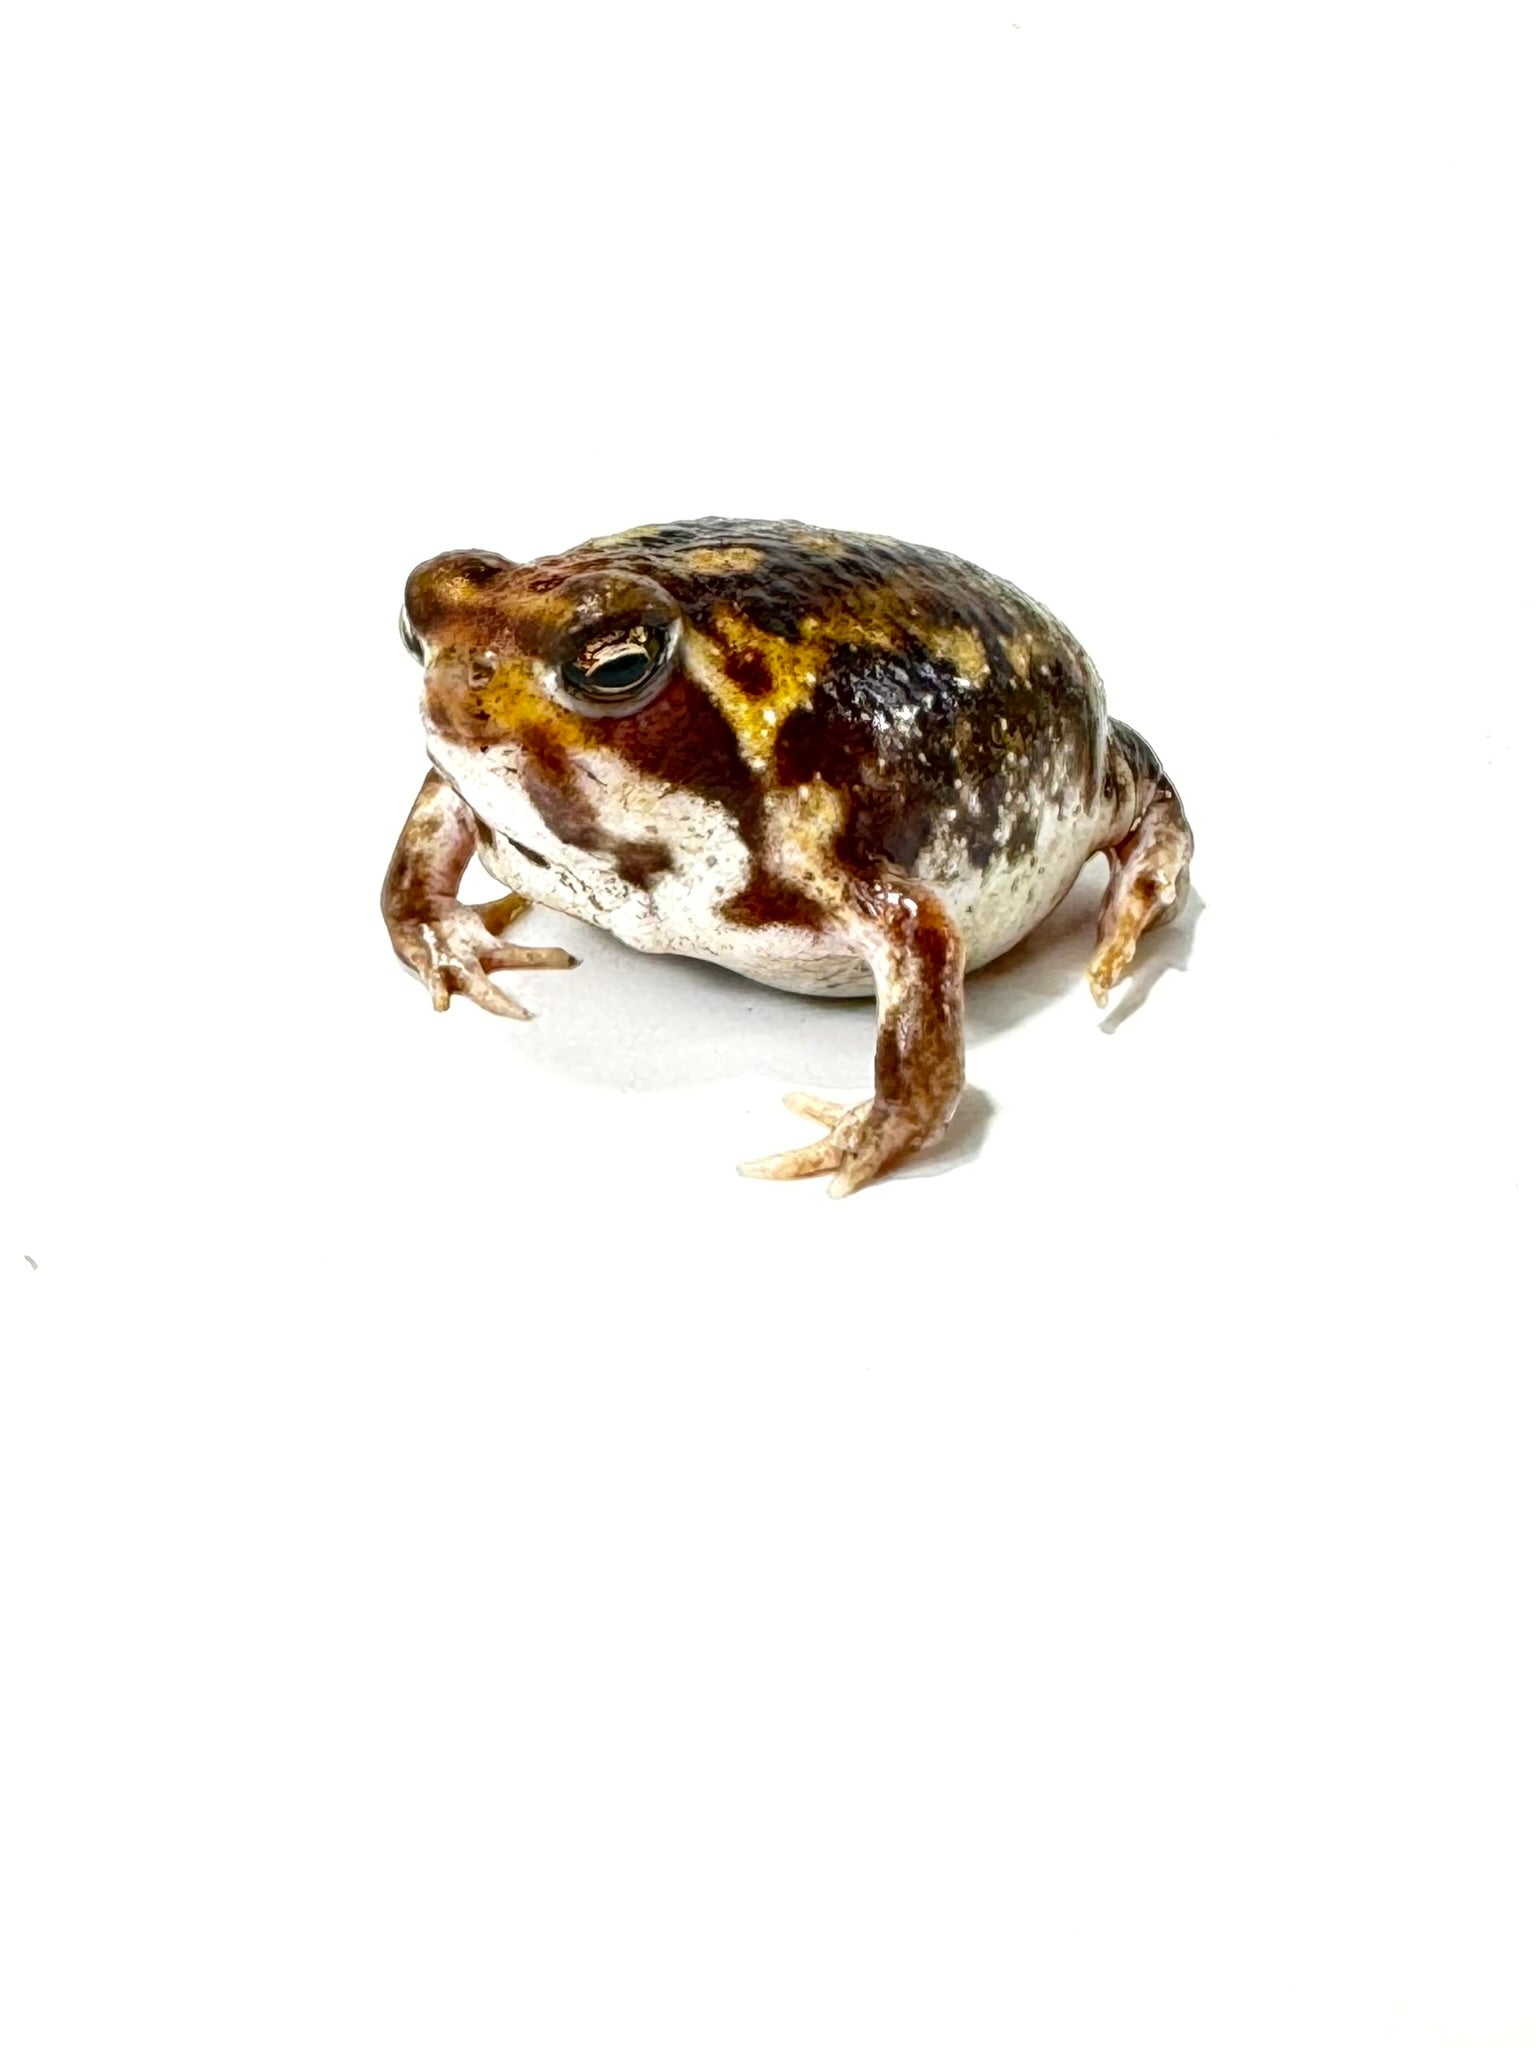 rain frog for sale